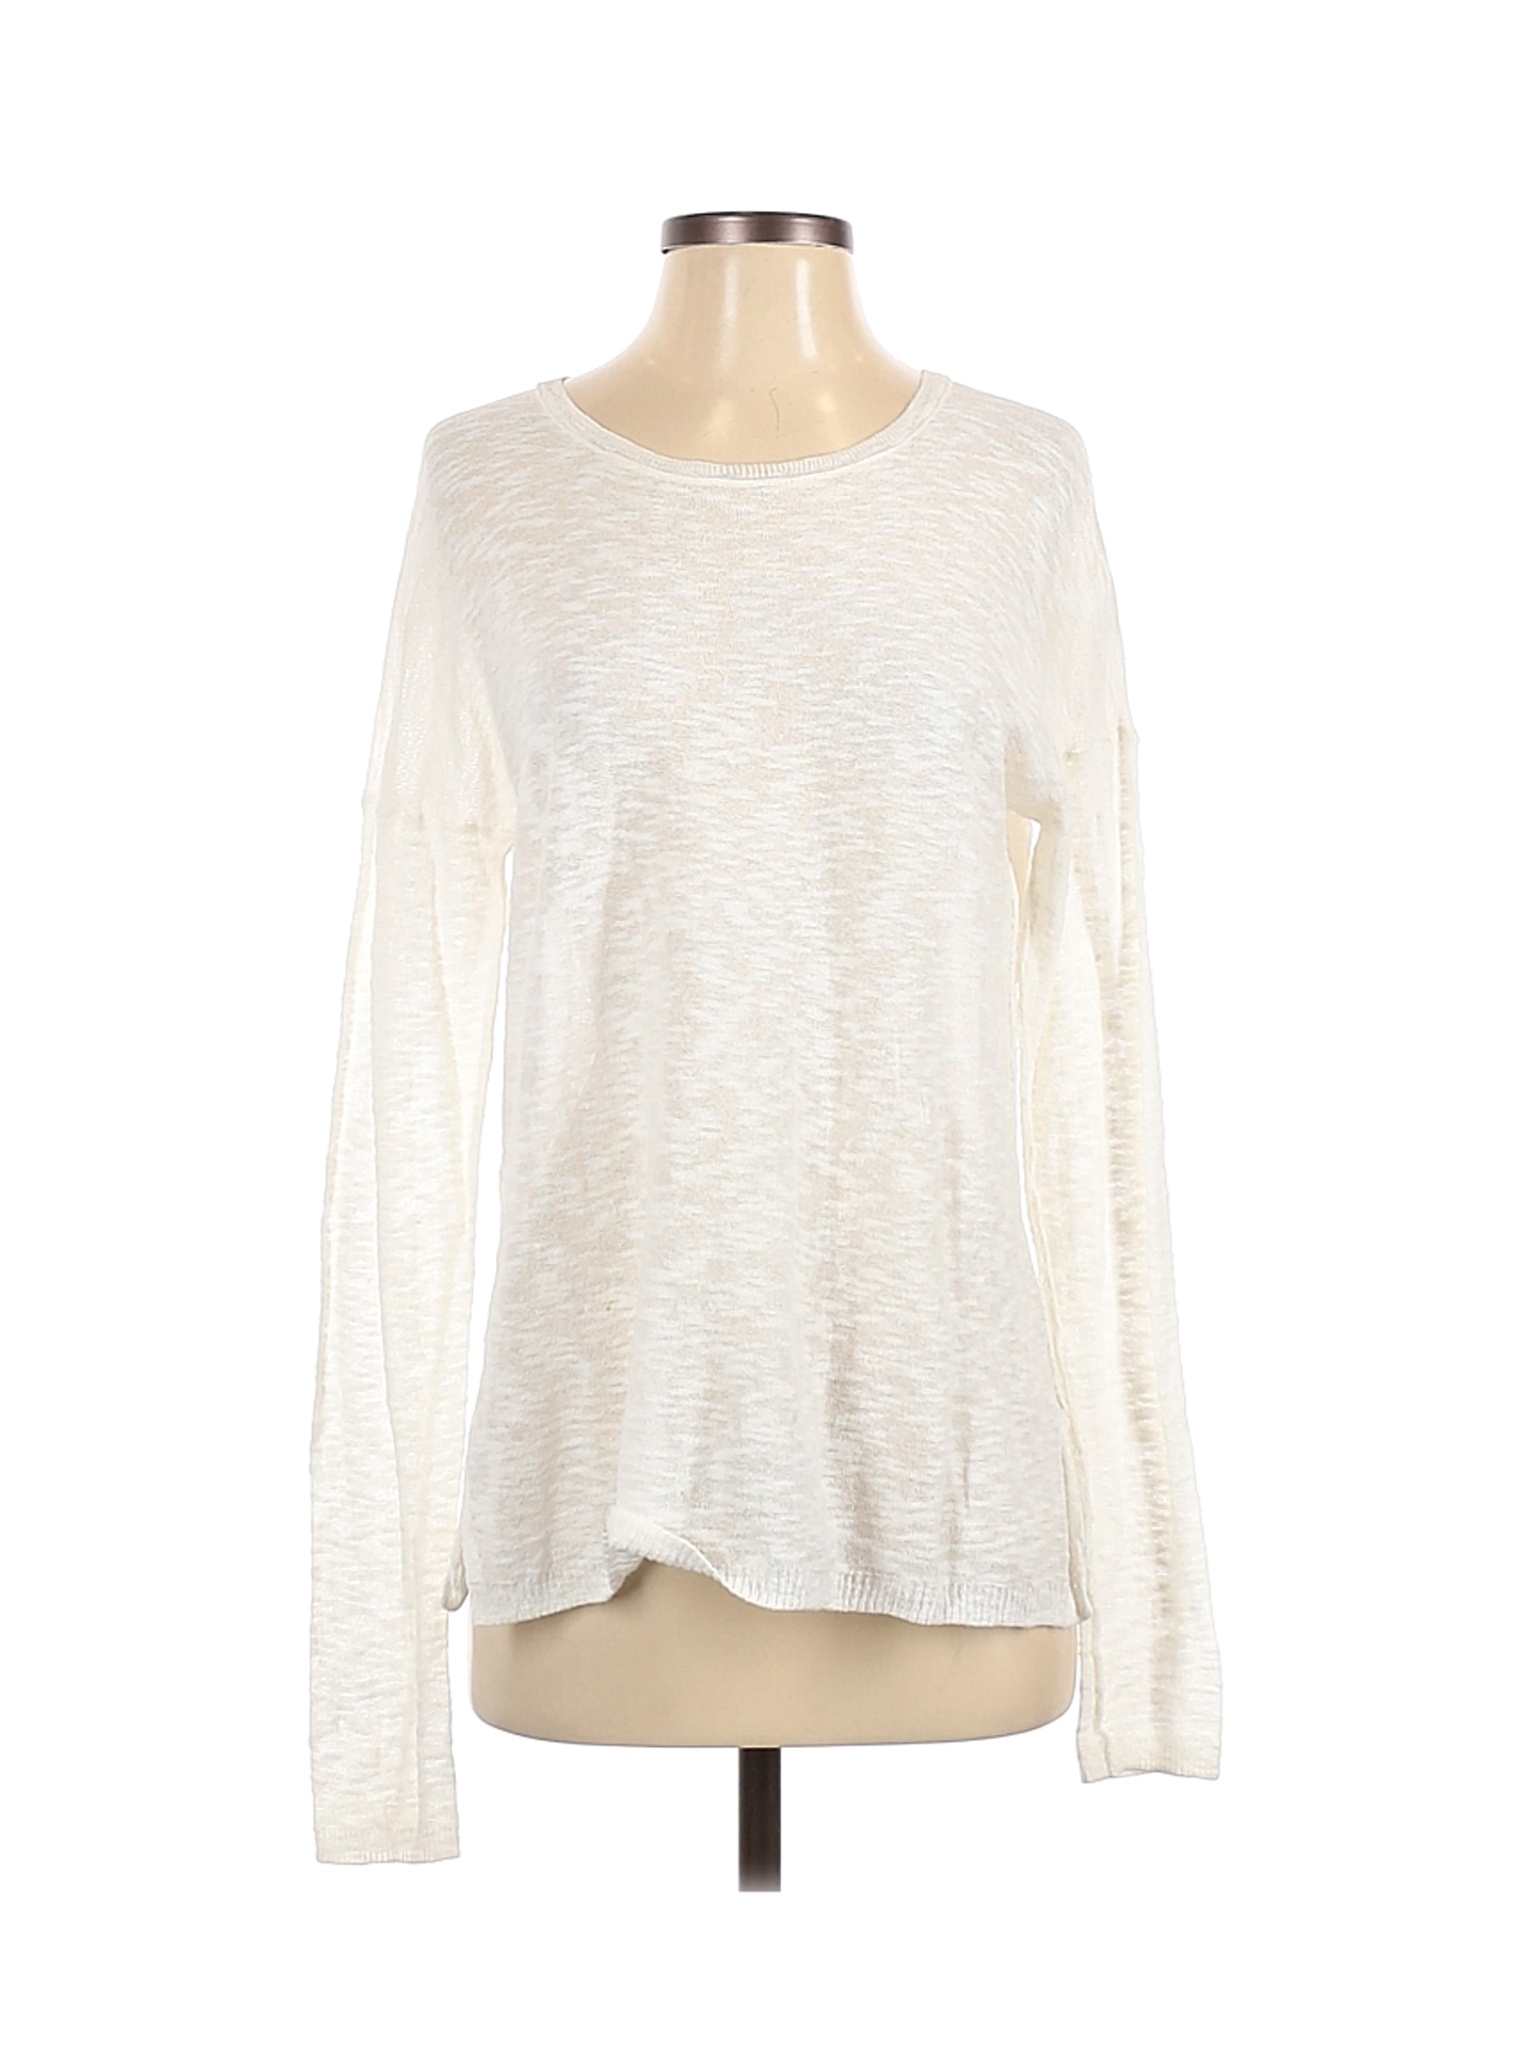 CALVIN KLEIN JEANS Women White Long Sleeve Top S | eBay